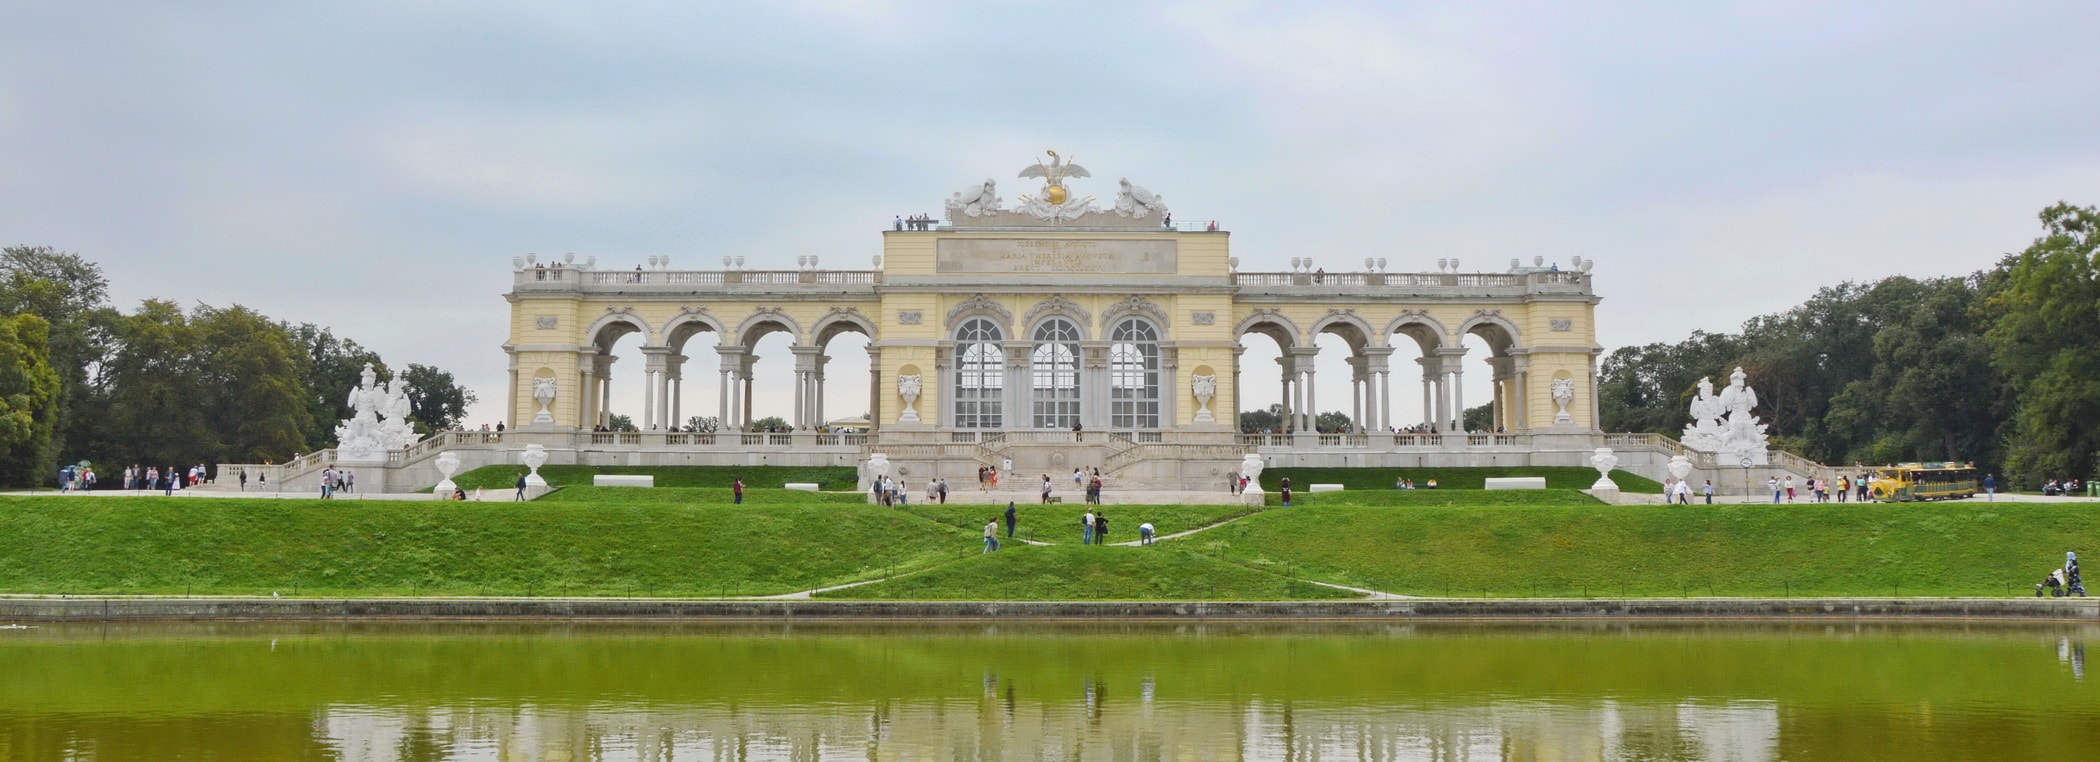 The Schönbrunn Gloriette stands on a hill above the Palace